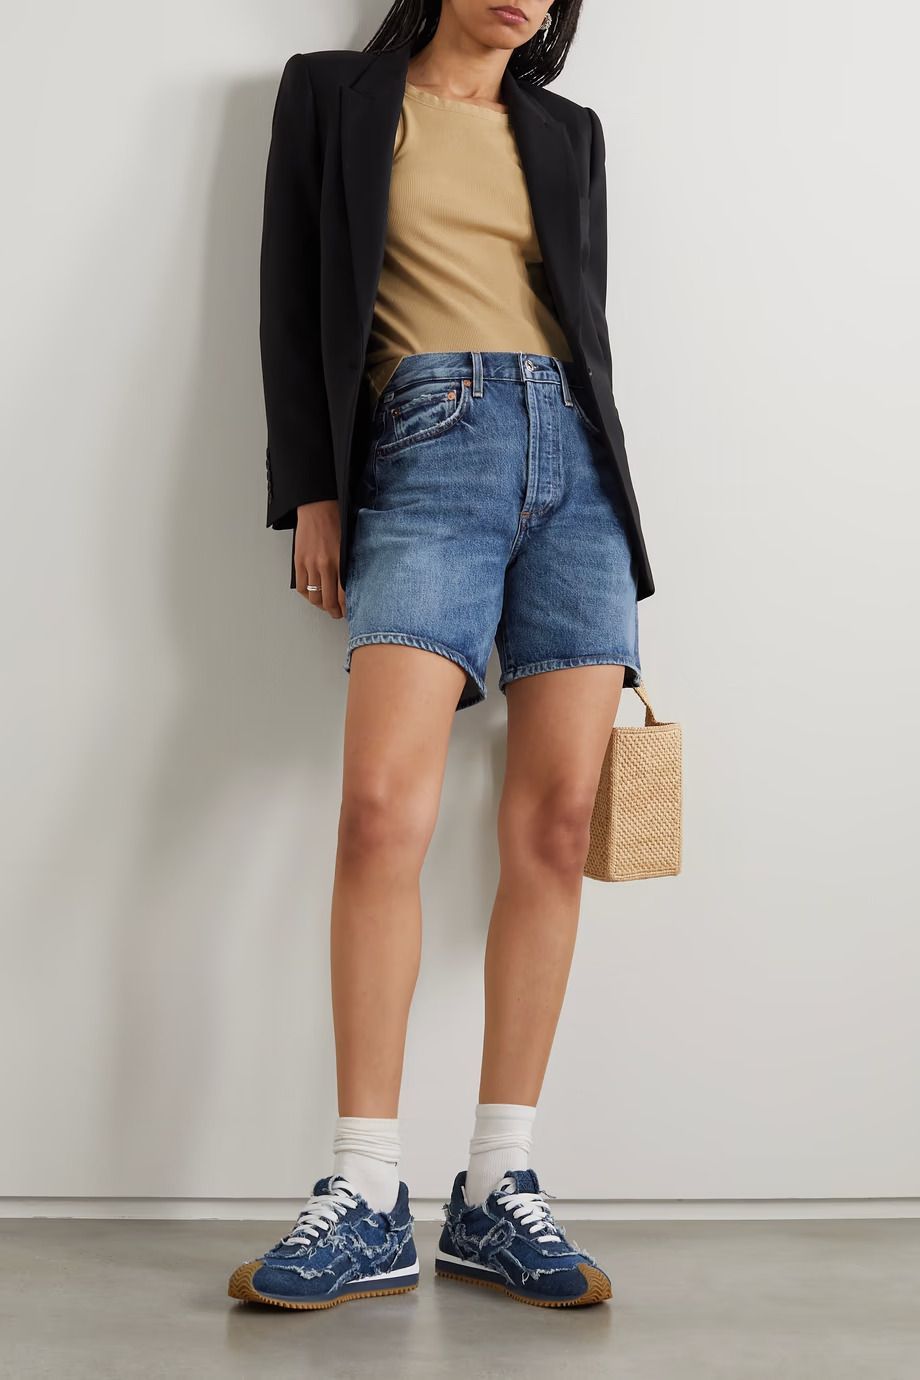 Jean Shorts - Shop This Season's Women's Shorts